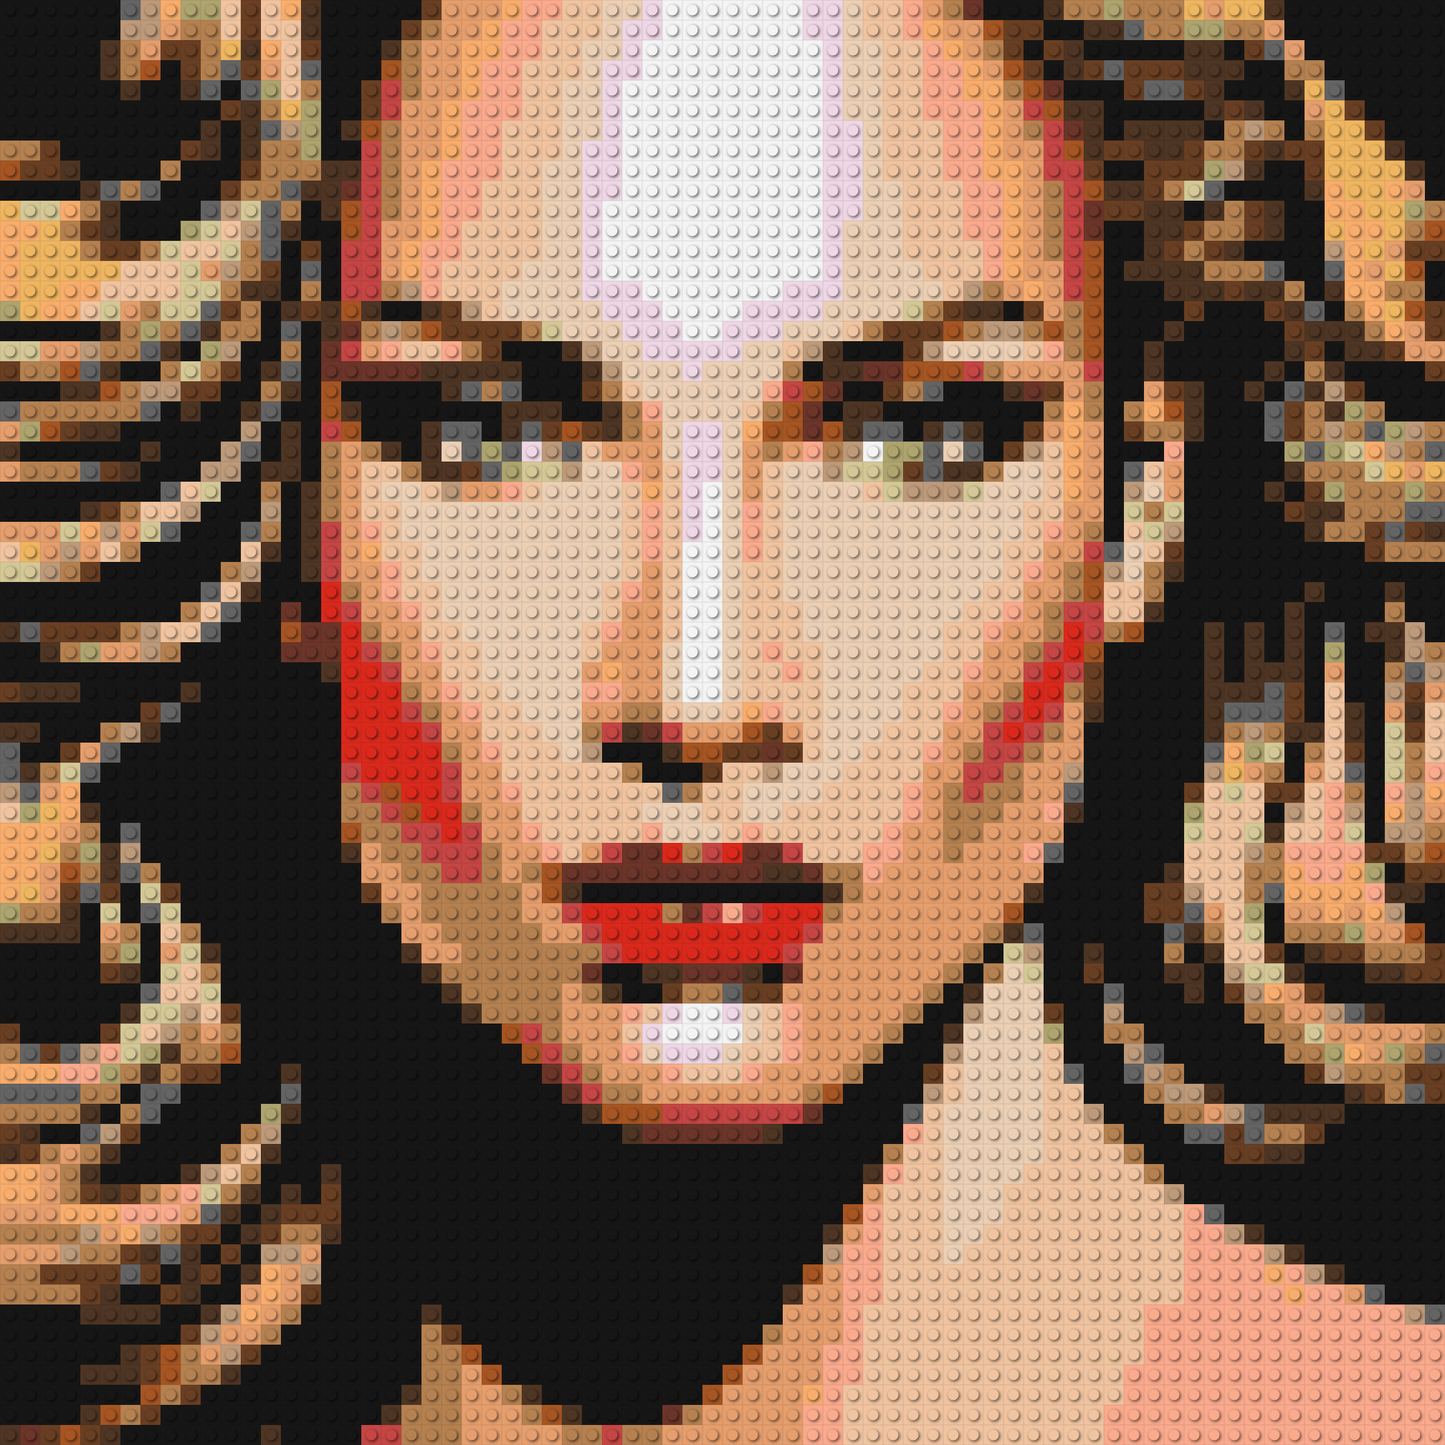 Jennifer Lopez - Brick Art Mosaic Kit